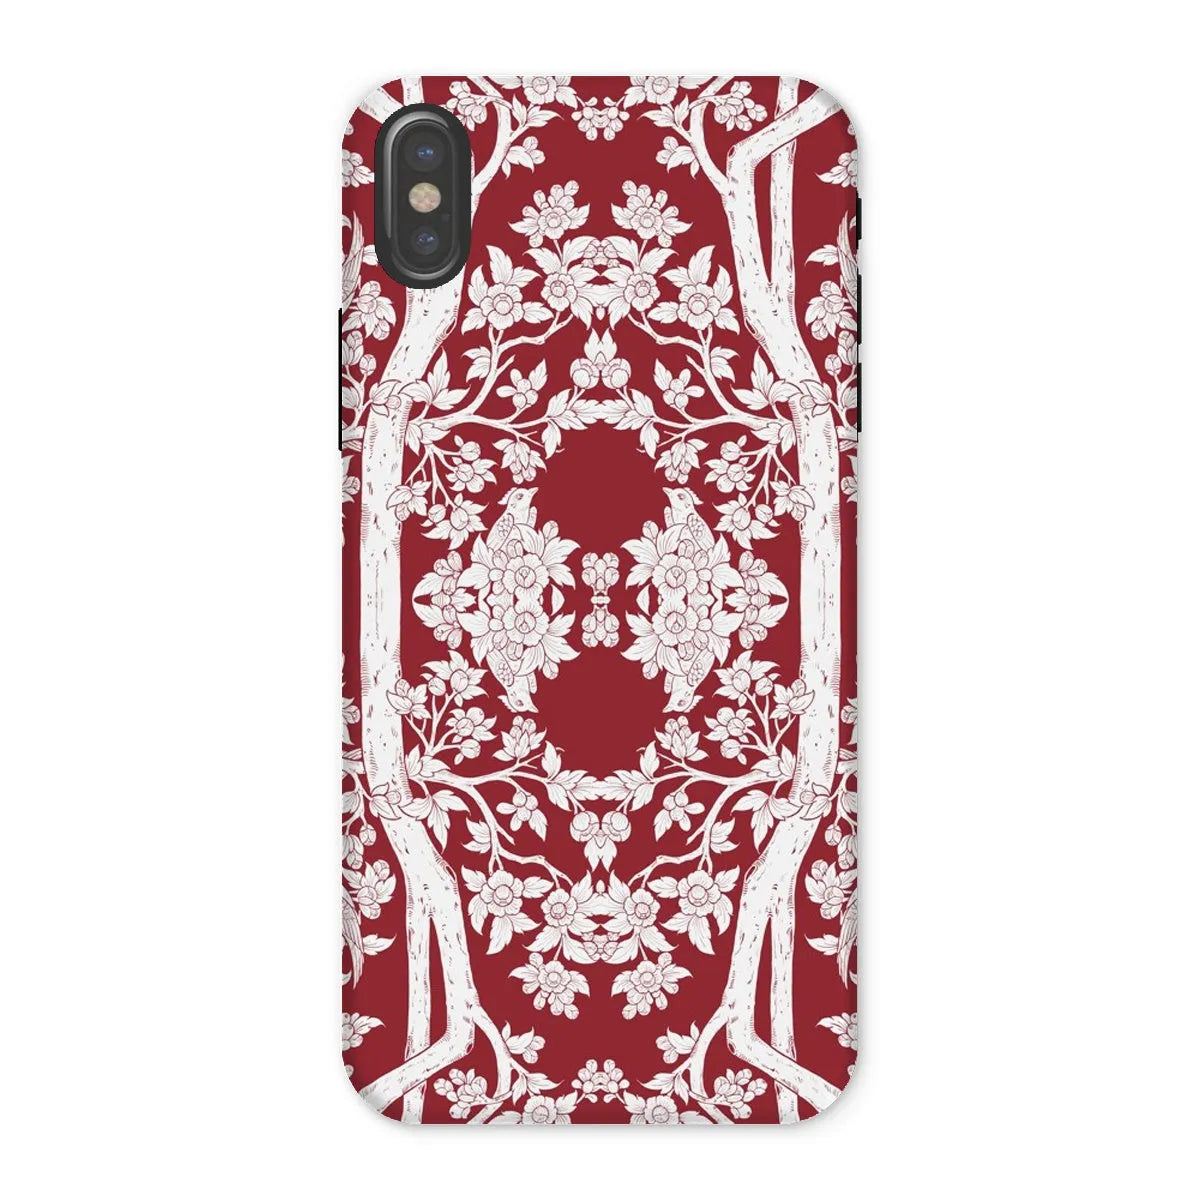 Aviary Red Aesthetic Pattern Art Phone Case - Iphone x / Matte - Mobile Phone Cases - Aesthetic Art